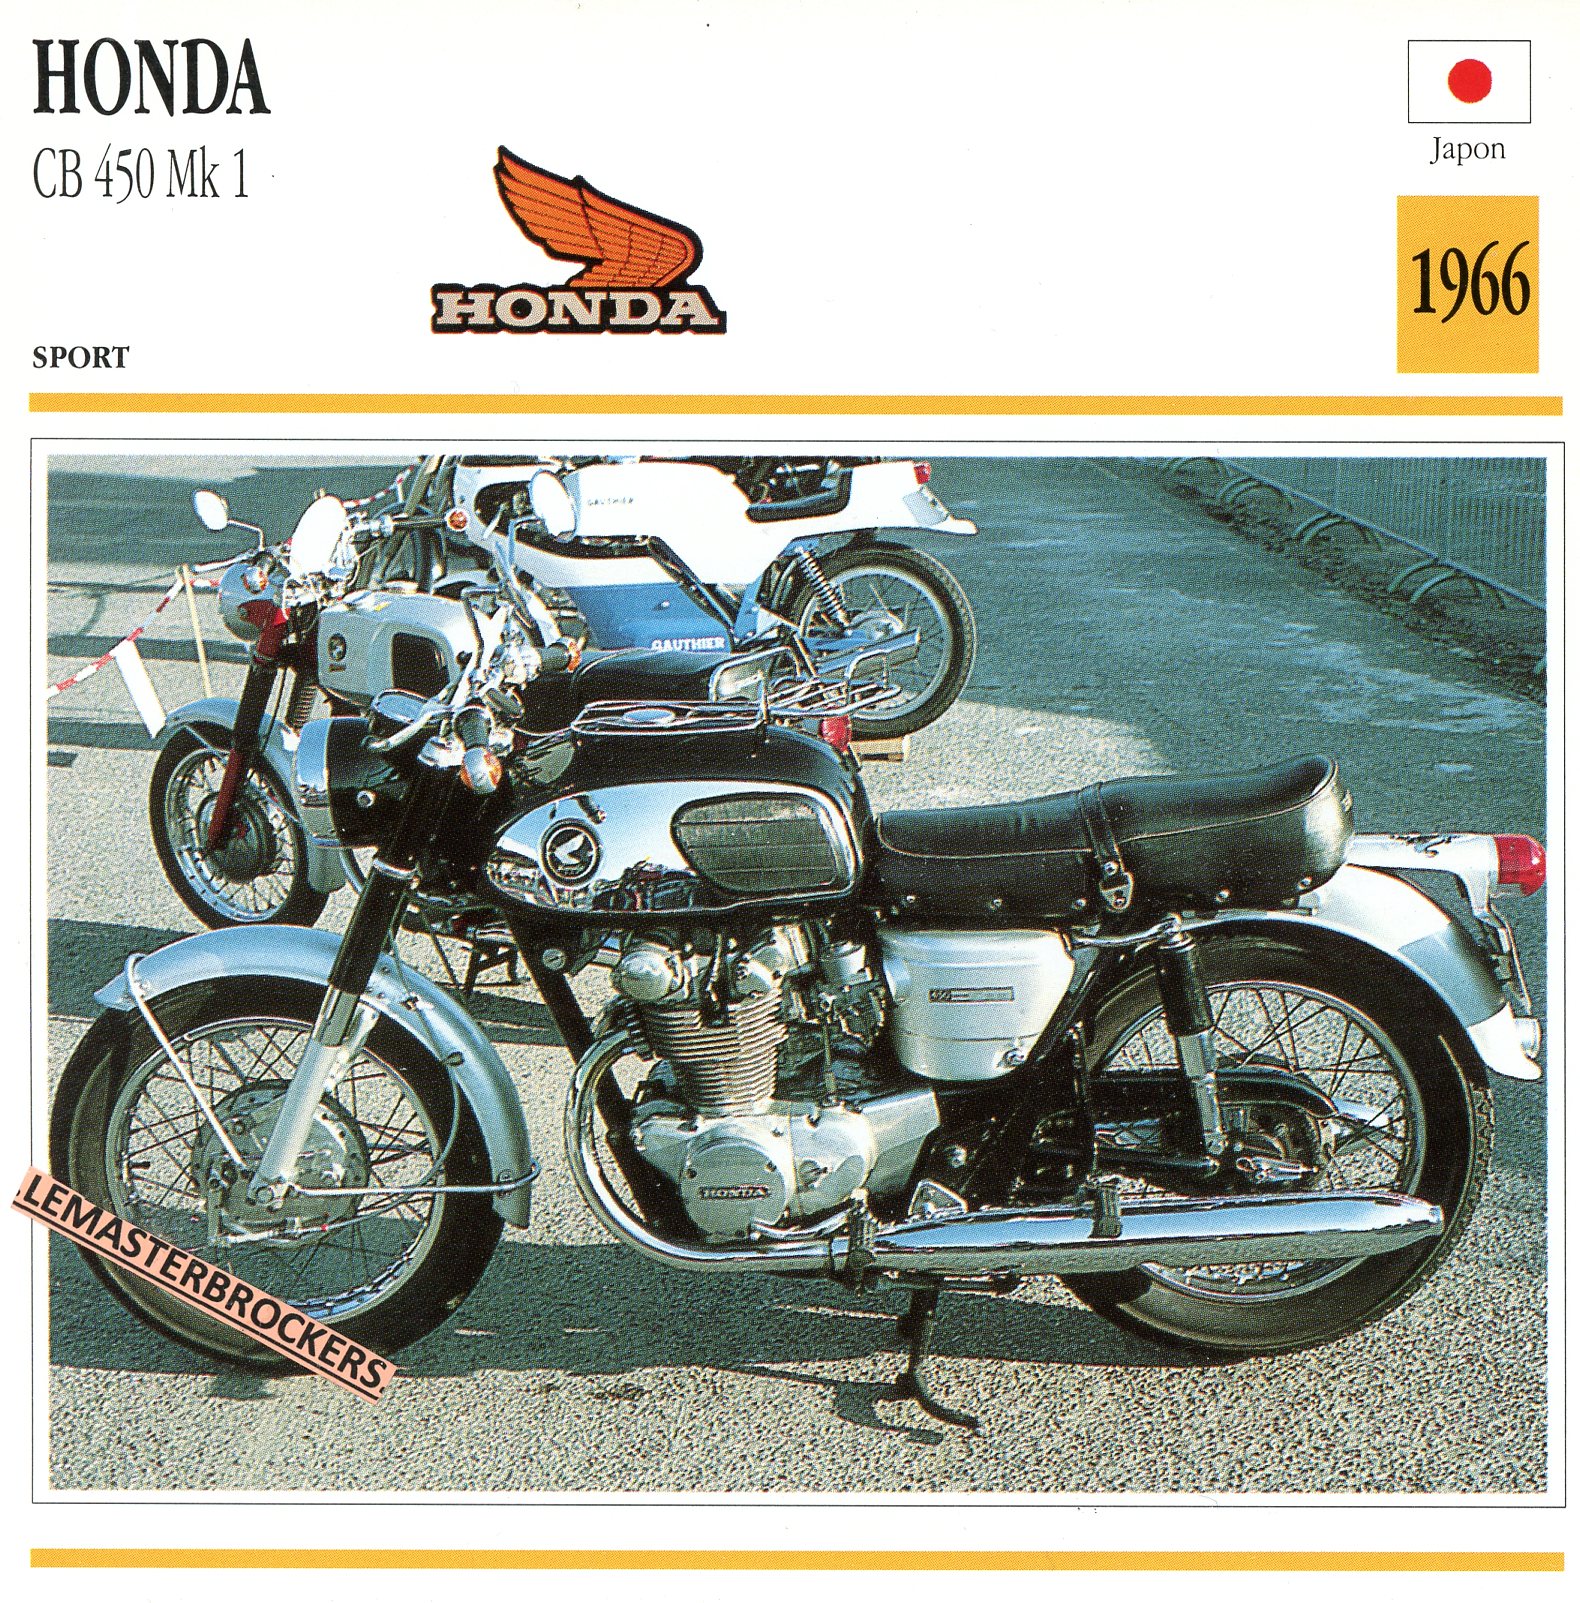 FICHE-MOTO-HONDA-CB450-MK1-1966-LEMASTERBROCKERS-CARS-MOTORCYCLE